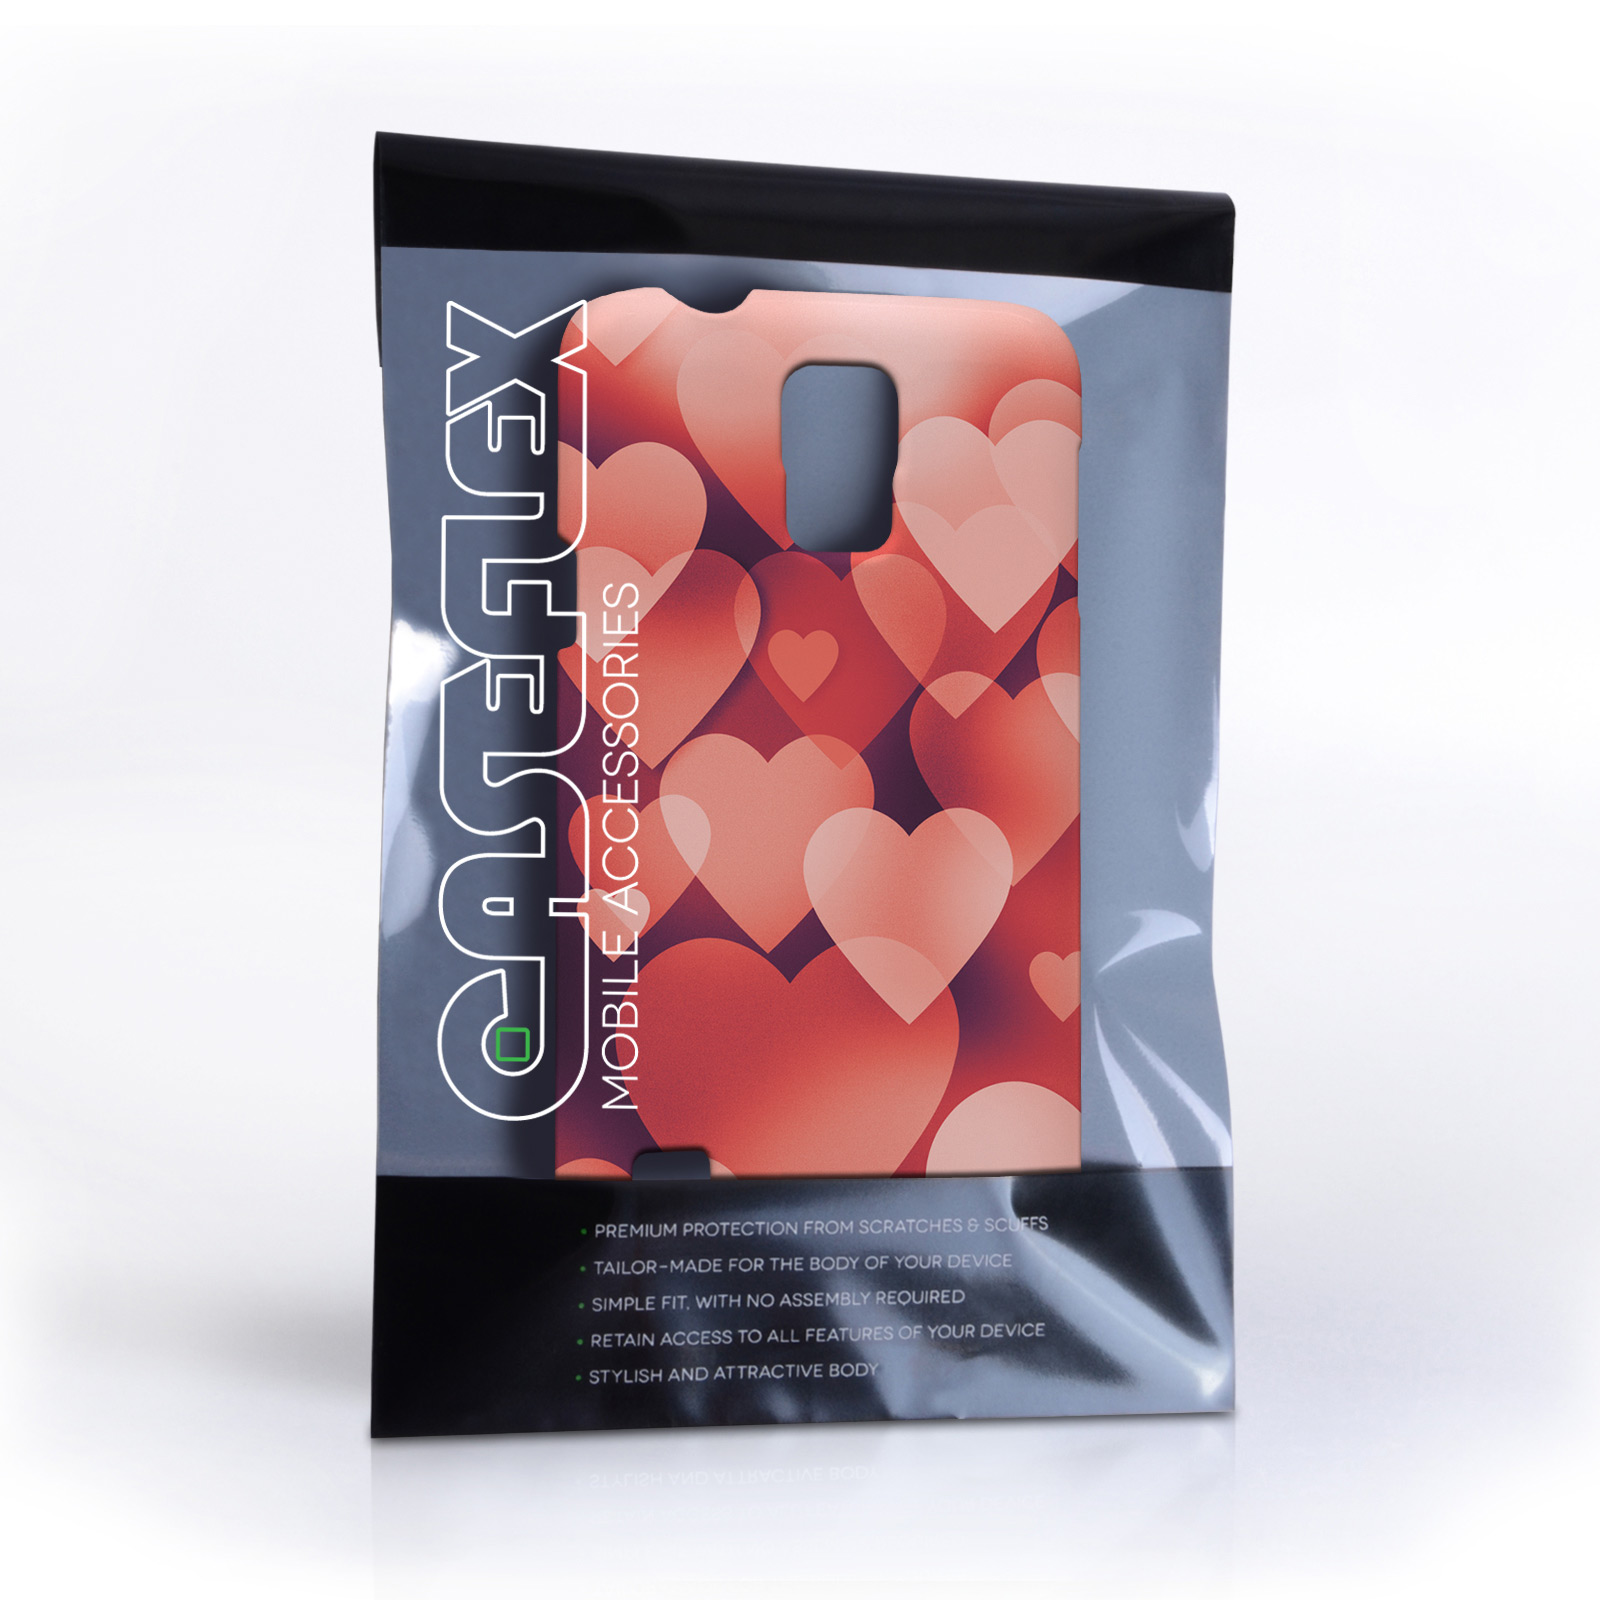 Caseflex Samsung Galaxy S5 Shimmering Hearts Case - Red